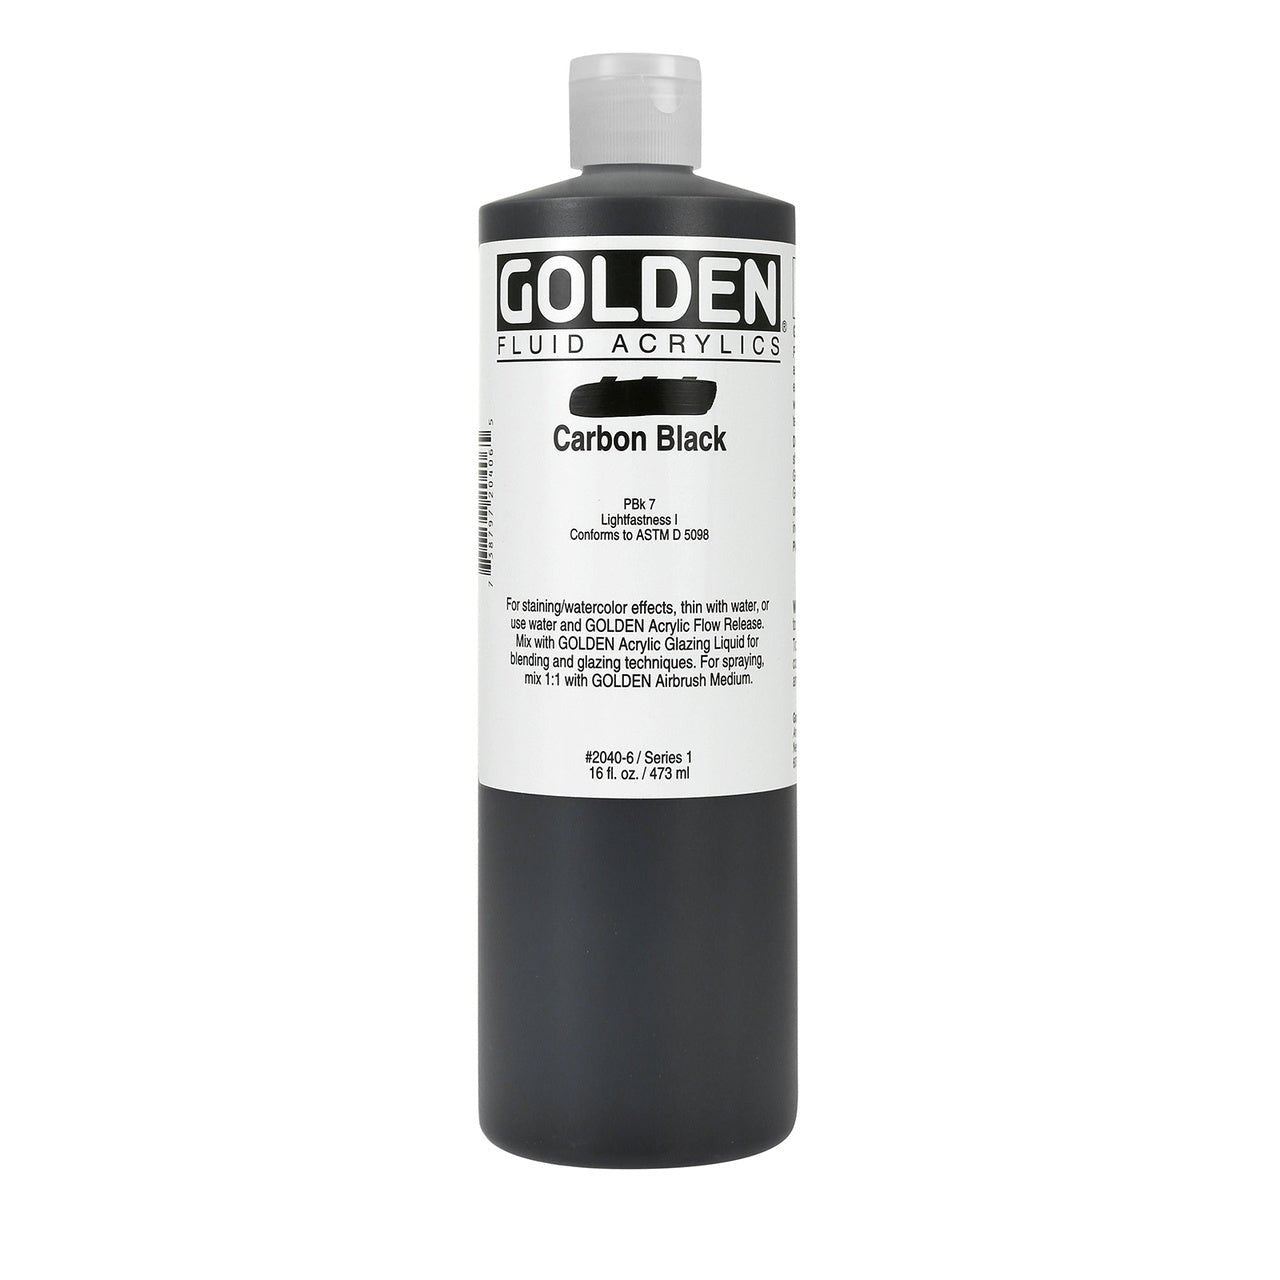 Golden Fluid Acrylic Carbon Black 16 oz - merriartist.com